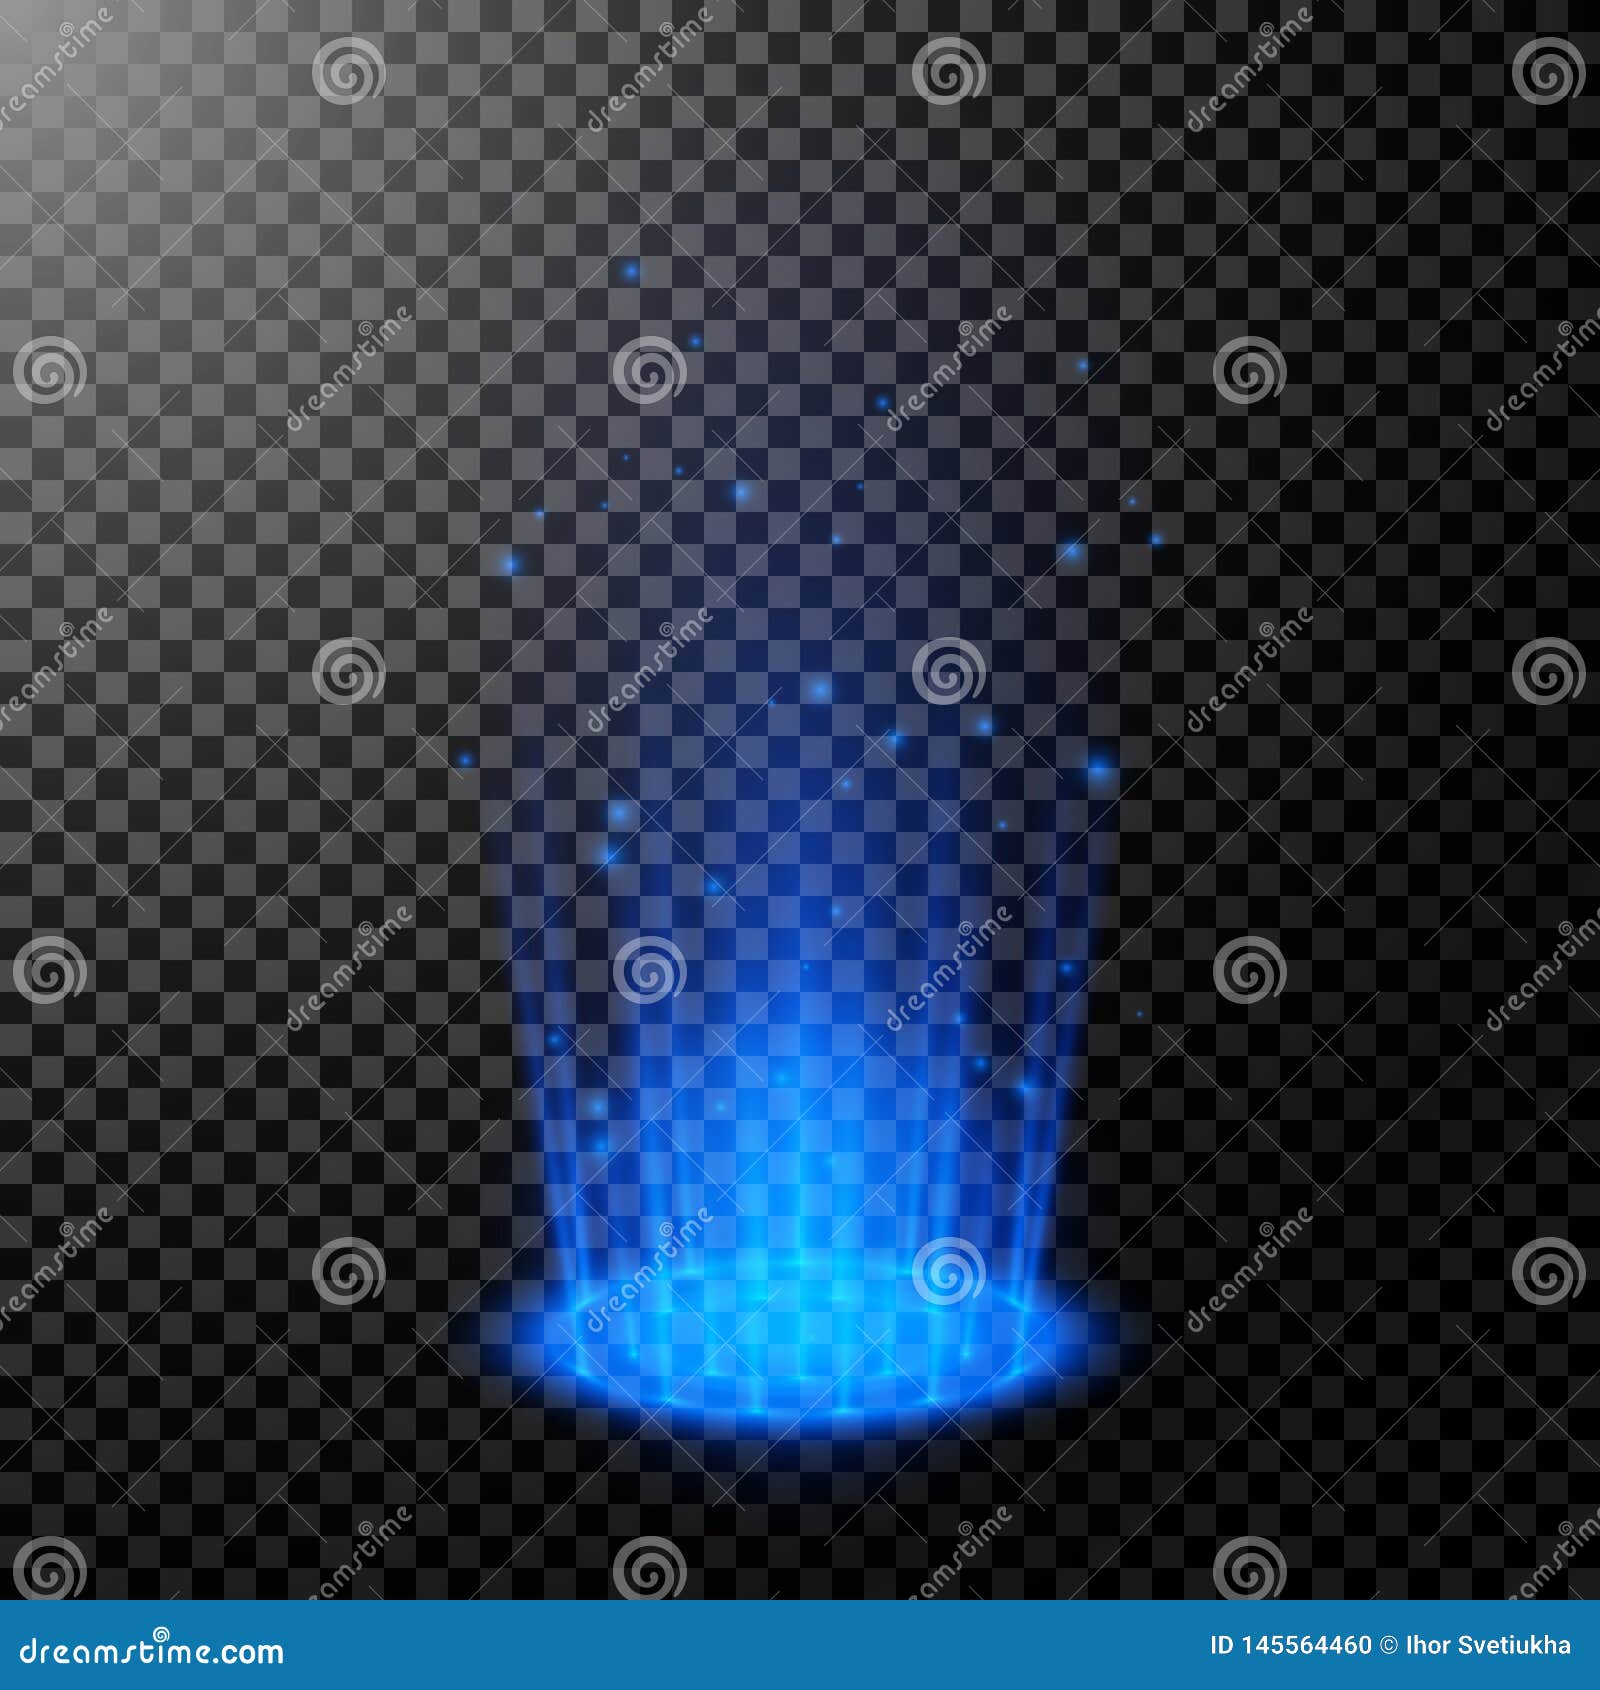 round blue glow rays. night scene with sparks. magic fantasy portal. empty light effect podium. futuristic teleport. 